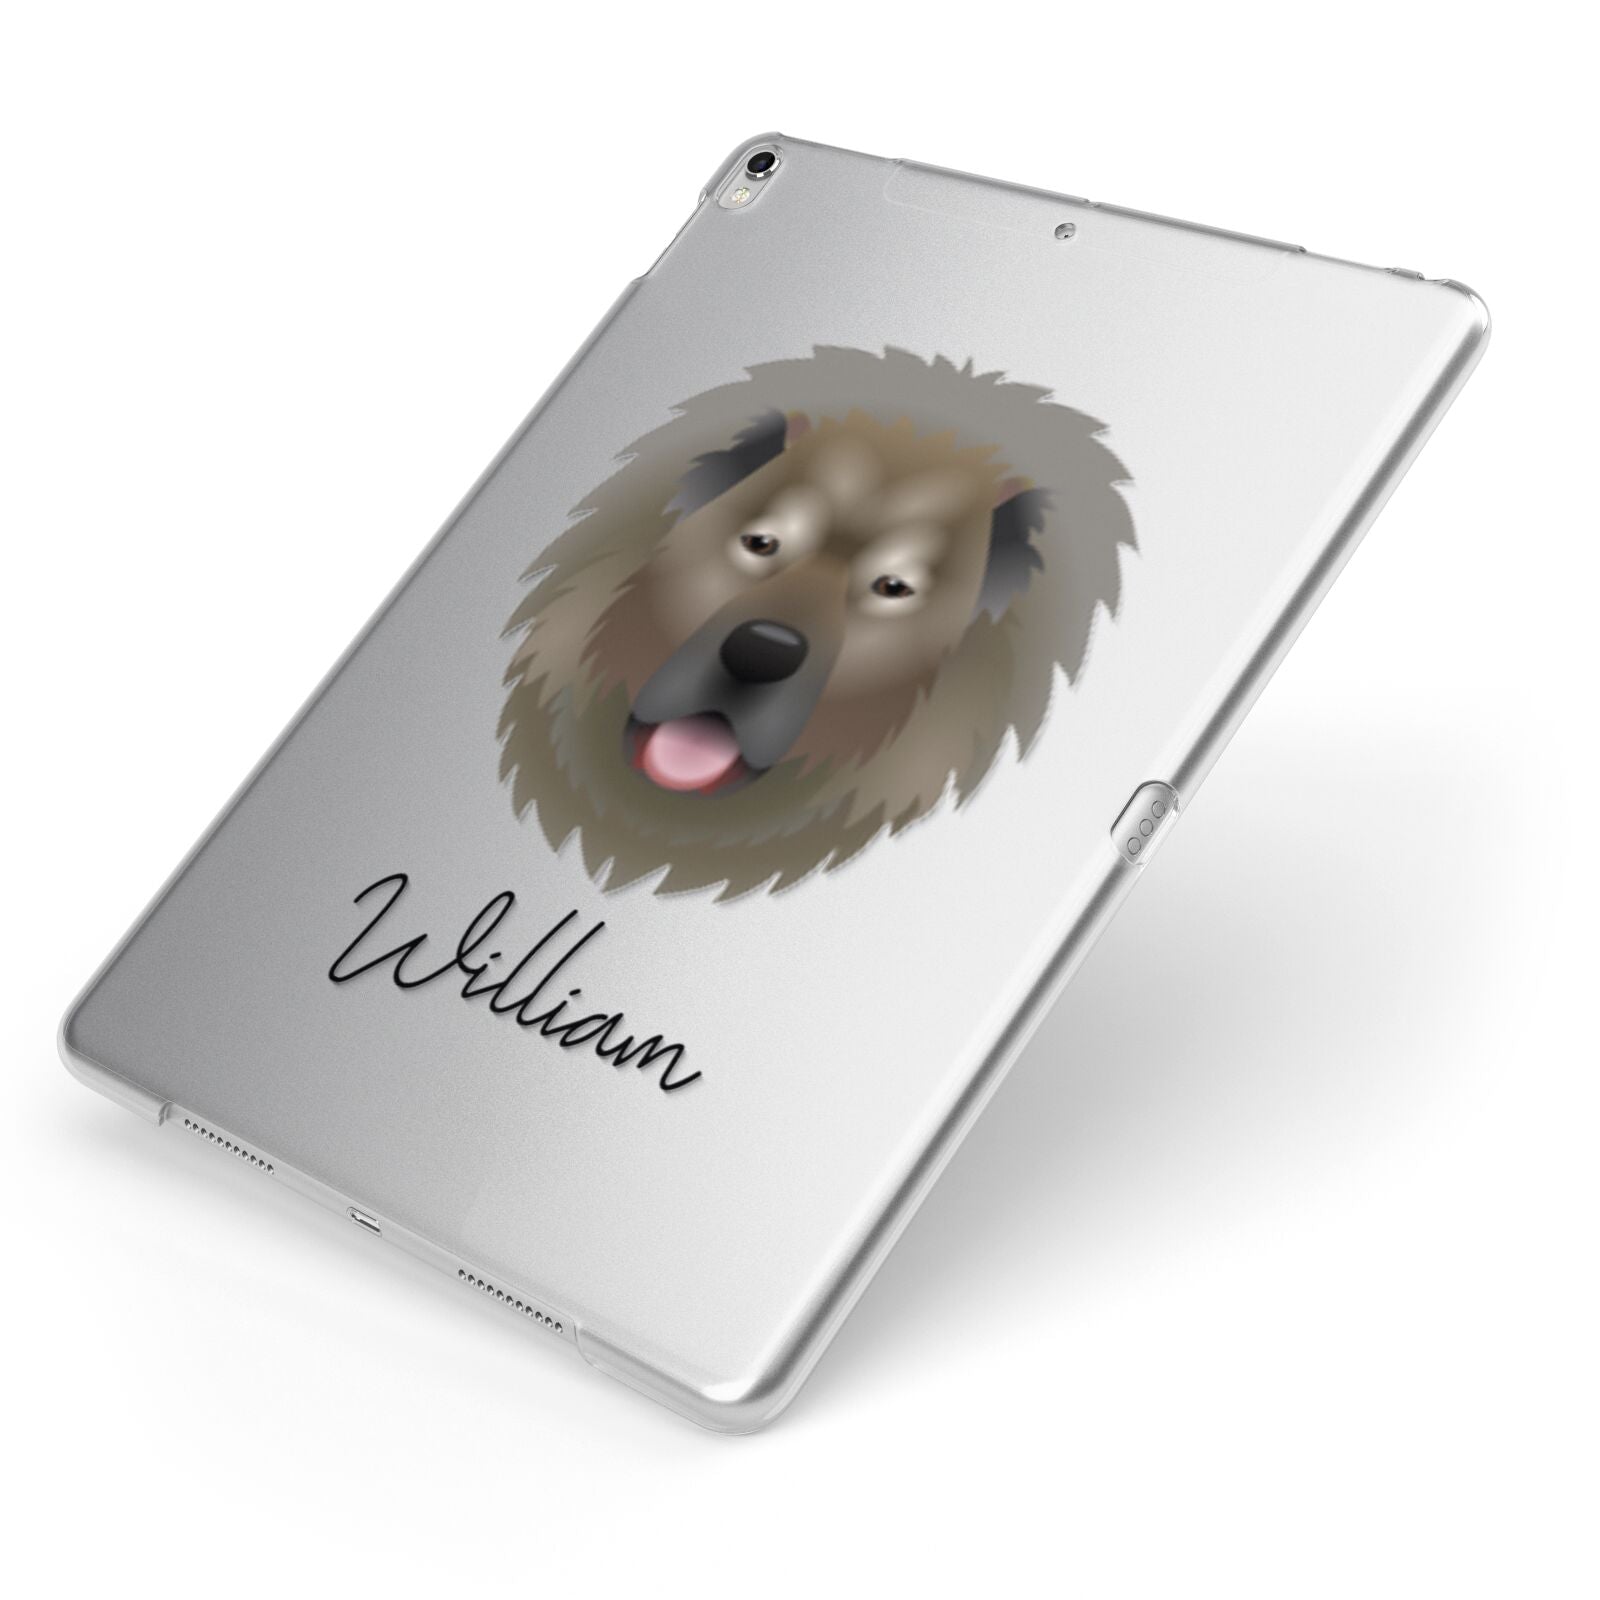 Causasian Shepherd Personalised Apple iPad Case on Silver iPad Side View